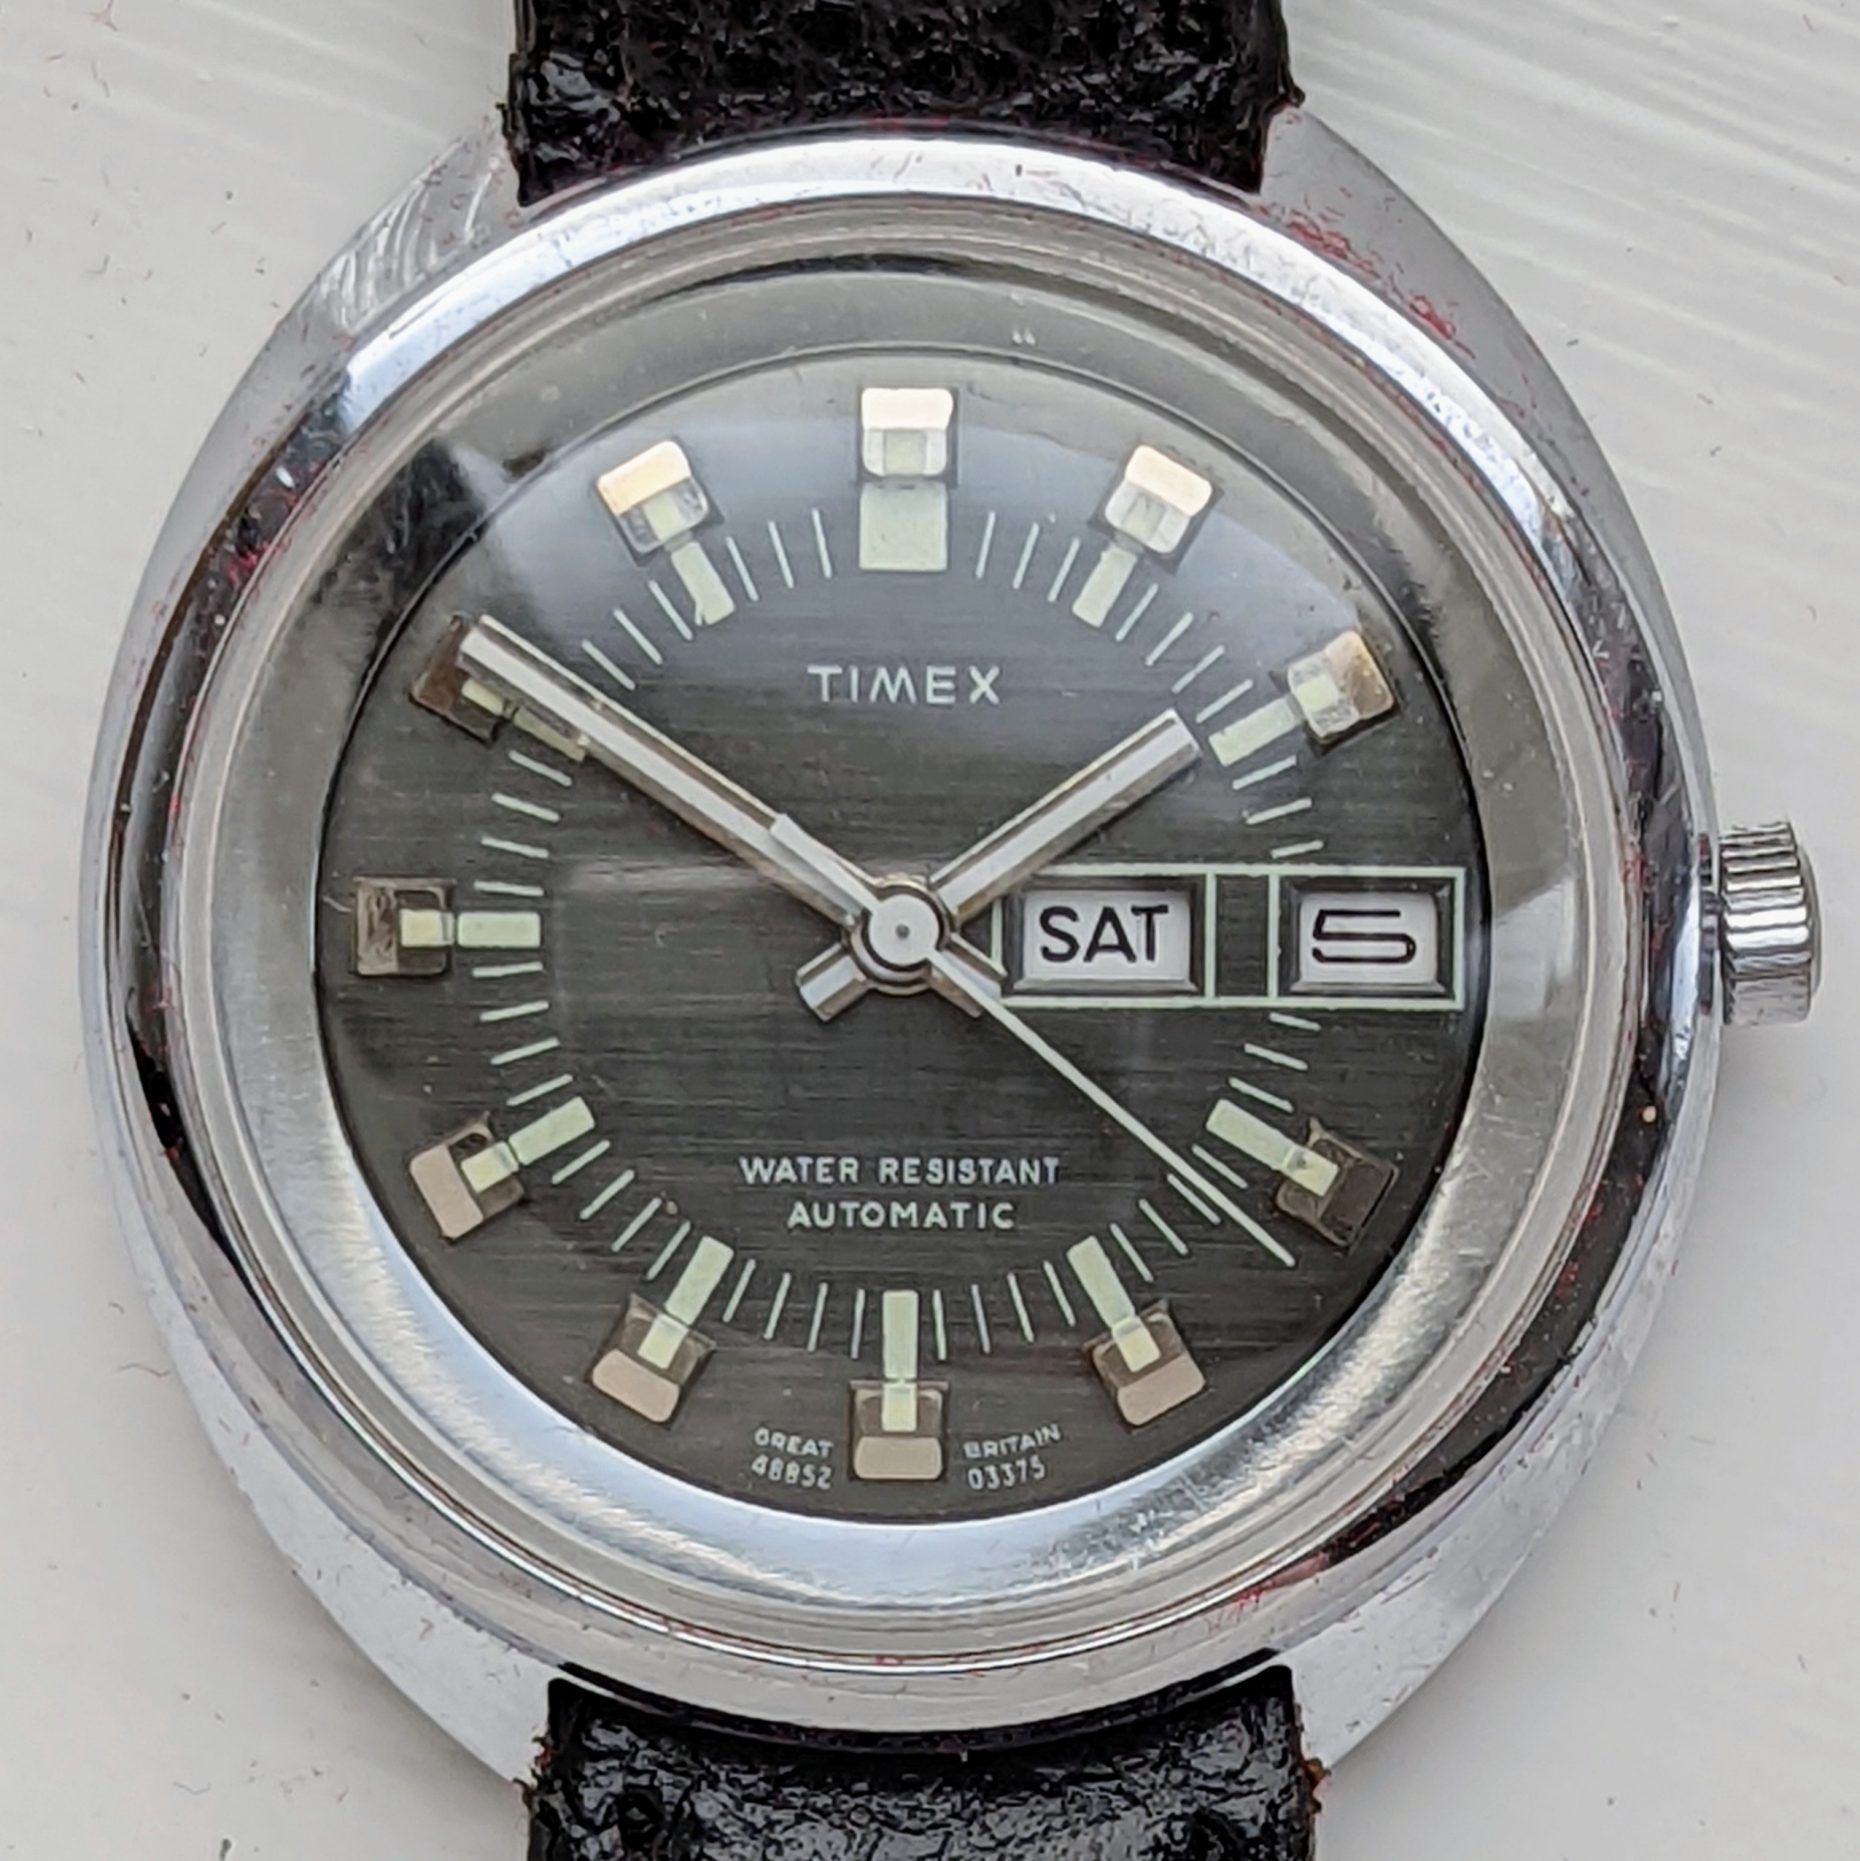 Timex Viscount 48852 03375 [1975]